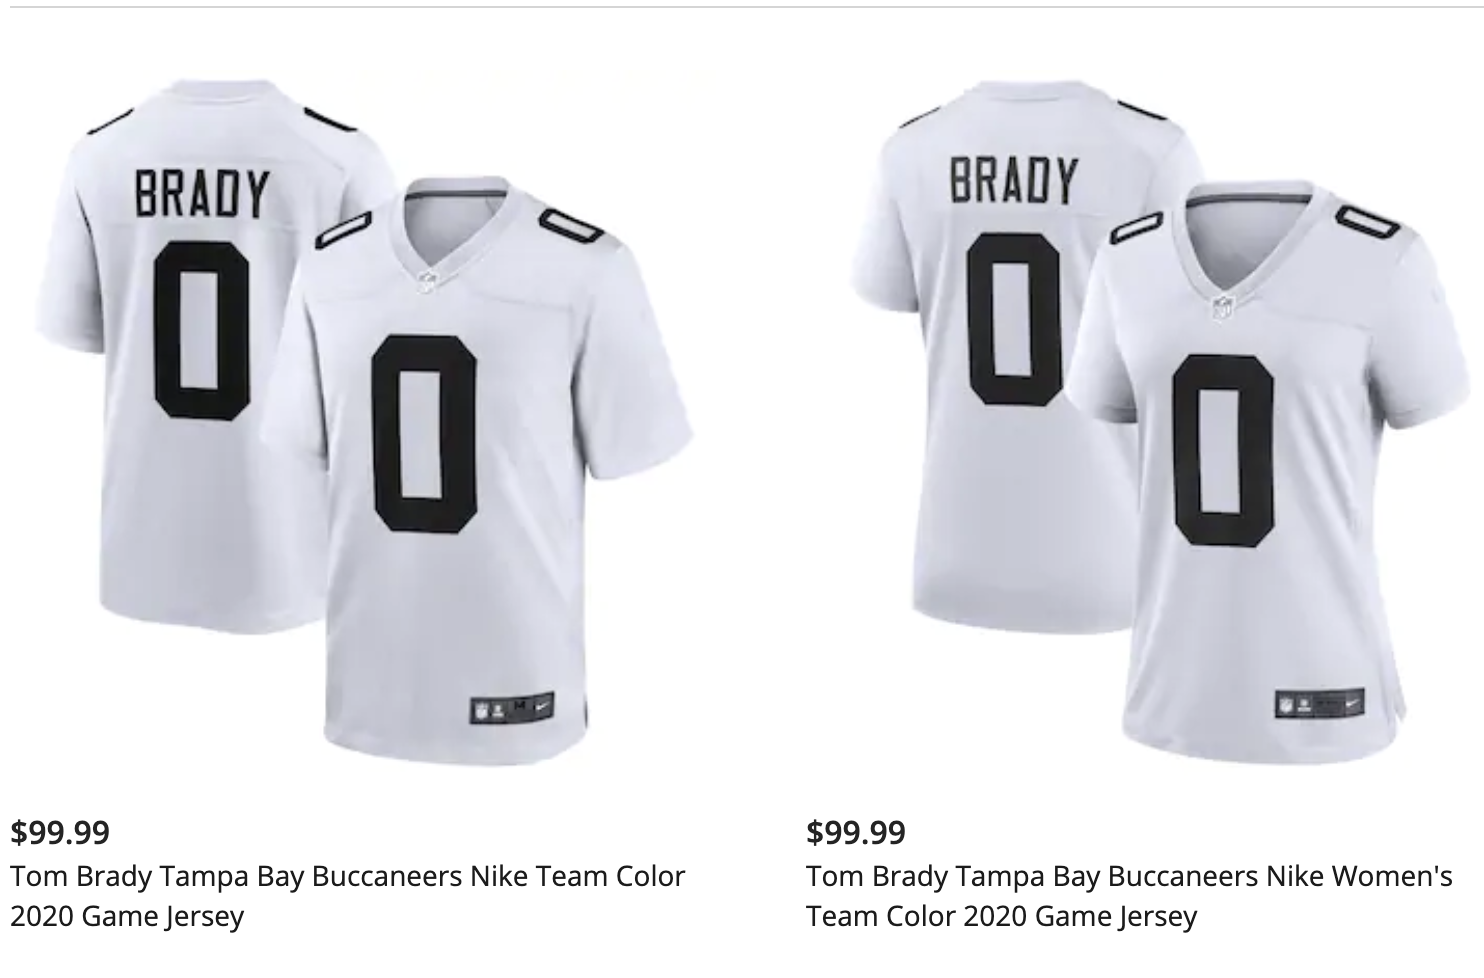 Tom Brady's arrival boosts Buccaneers merchandise sales in 2020